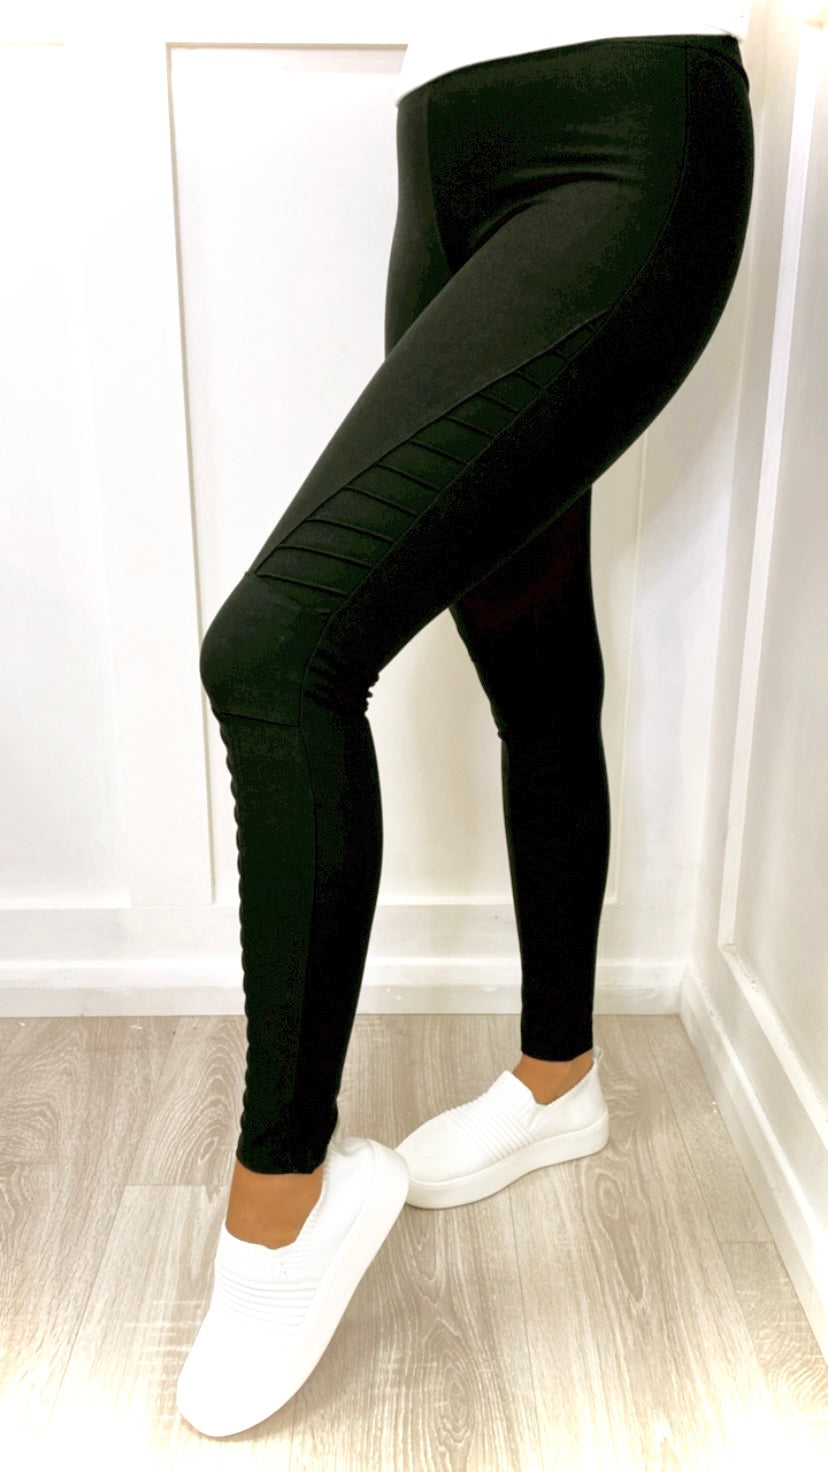 Xersion Leggings Black - $10 (50% Off Retail) - From Jenna